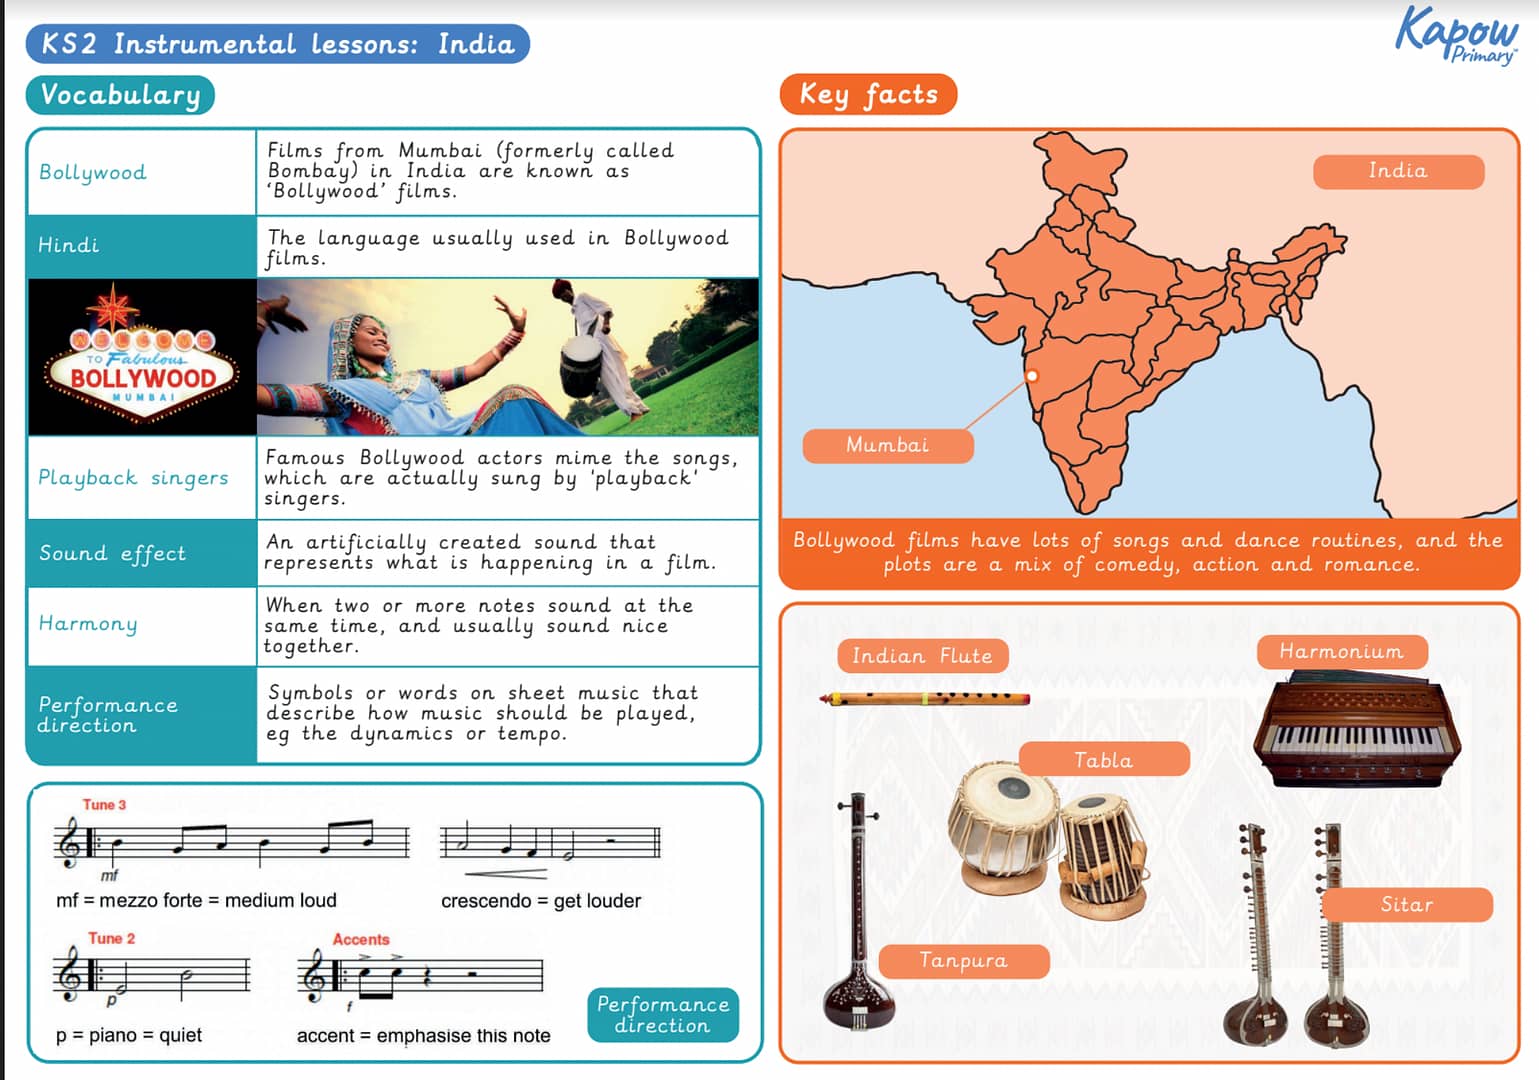 Knowledge organiser: KS2 Instrumental Music: India